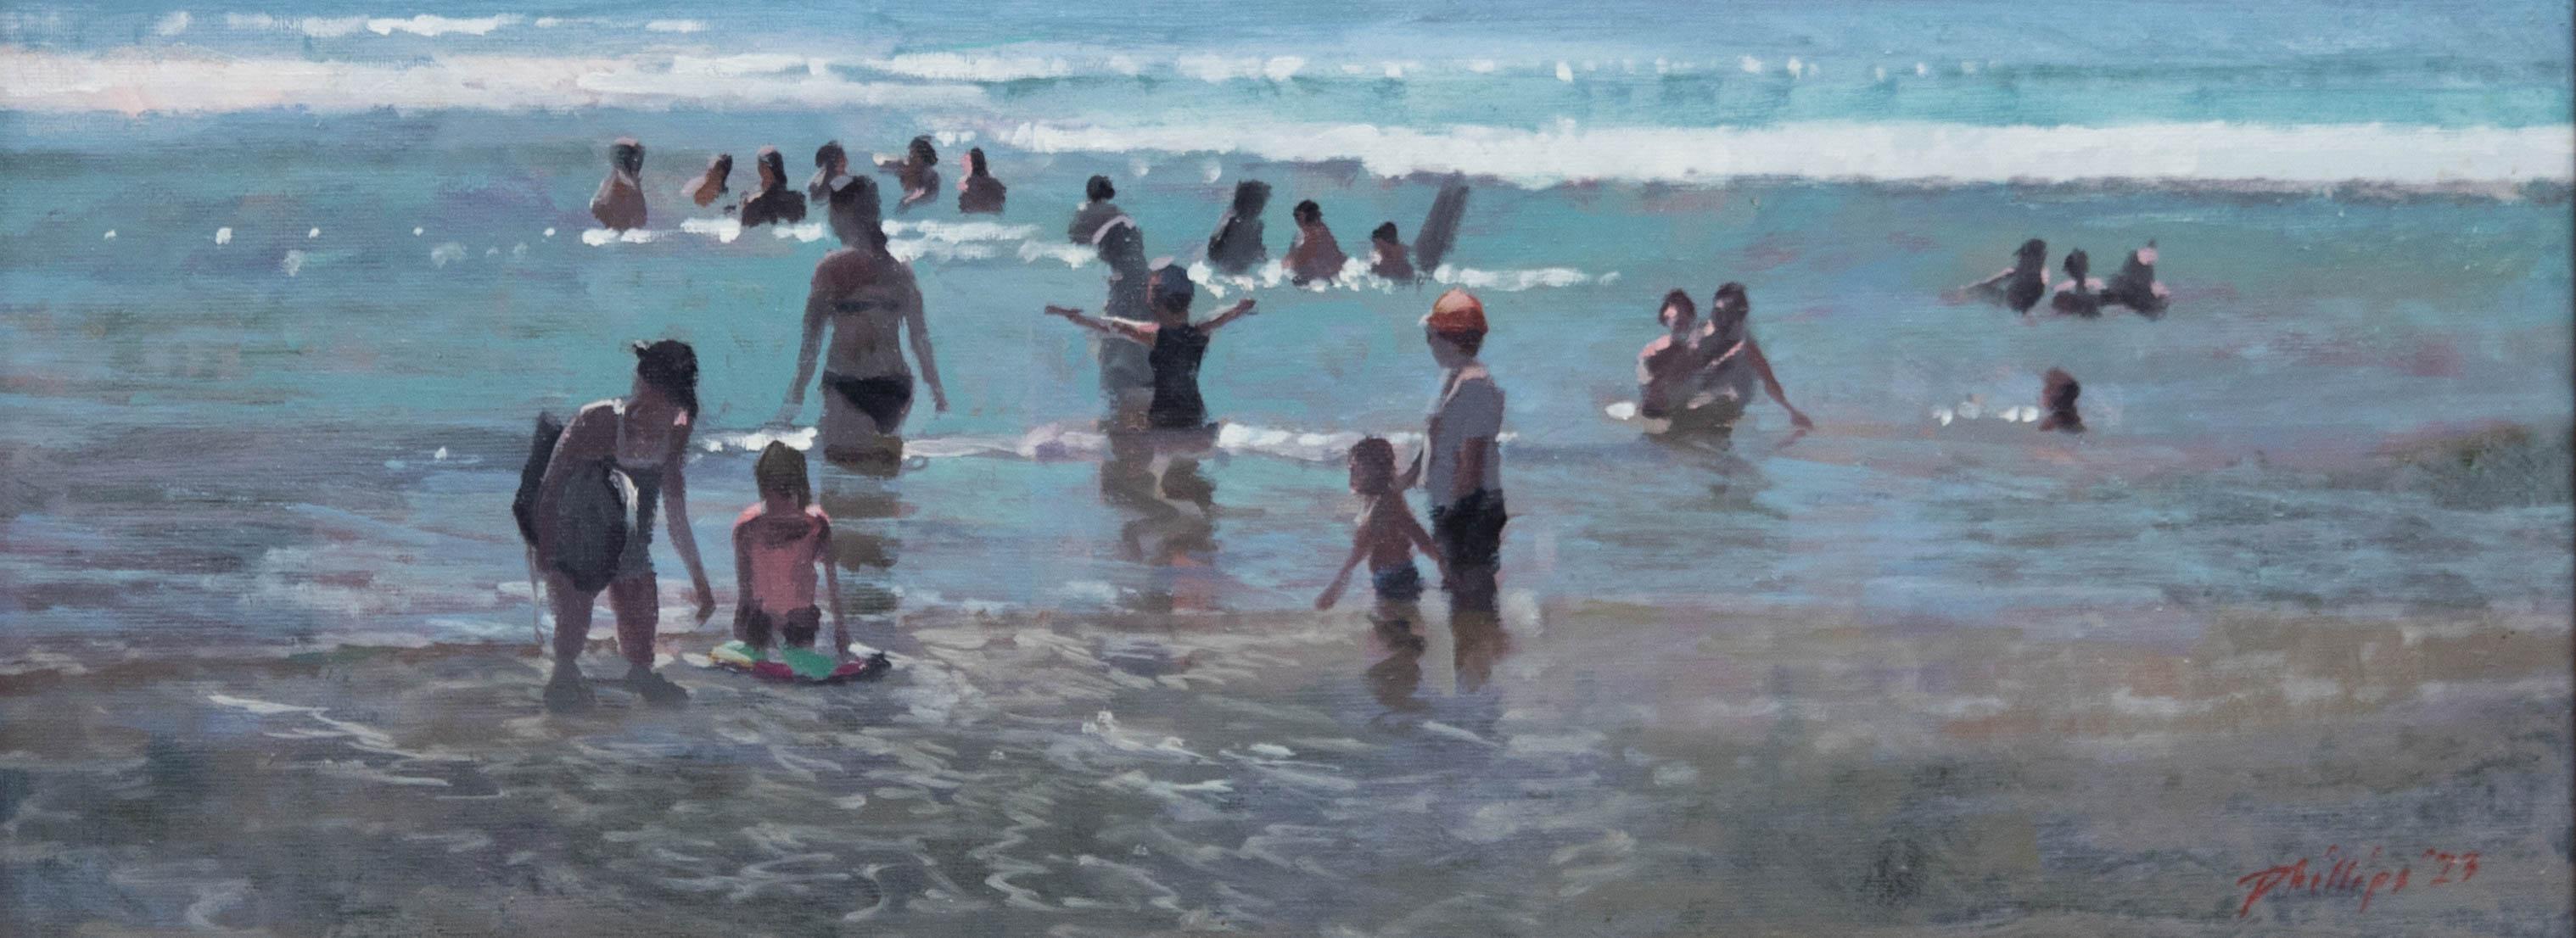 Peter Z. Phillips - Gerahmtes Contemporary Öl, Schwimmer – Painting von Peter Phillips